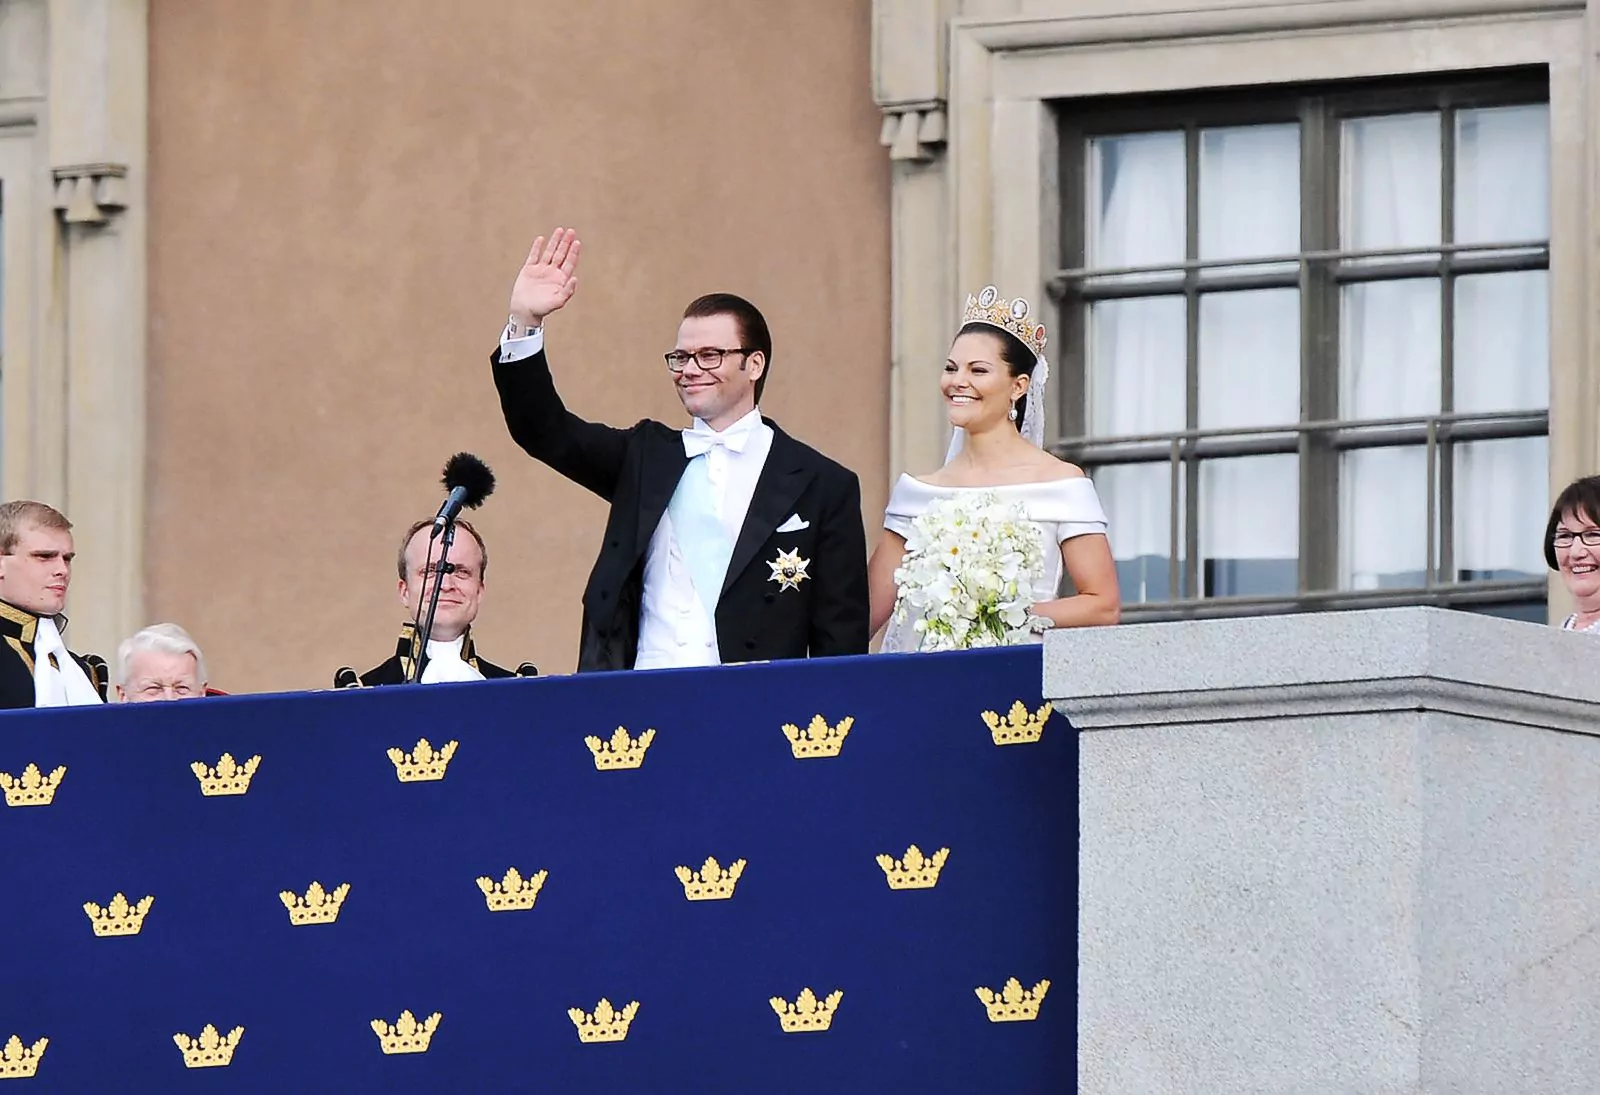 Wedding of Crown Princess Victoria and Daniel Westling at Storkyrkan Church, Stockholm, 19 June 2010